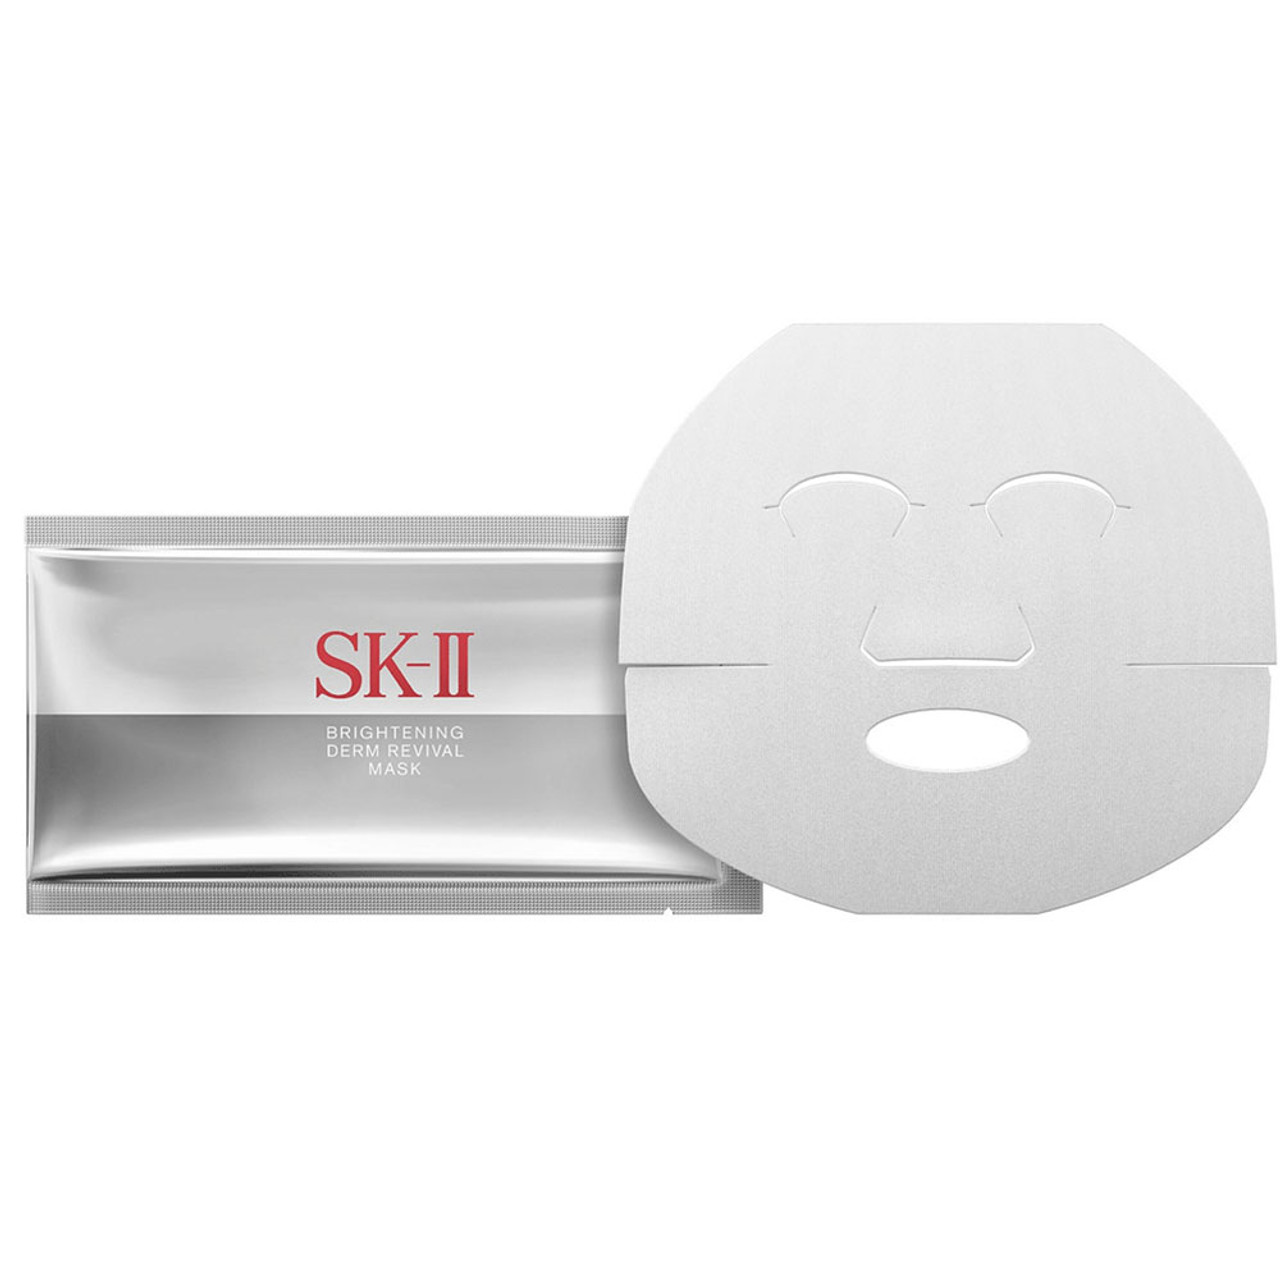 SK-II Brightening Derm Revival Mask (10-Pk)